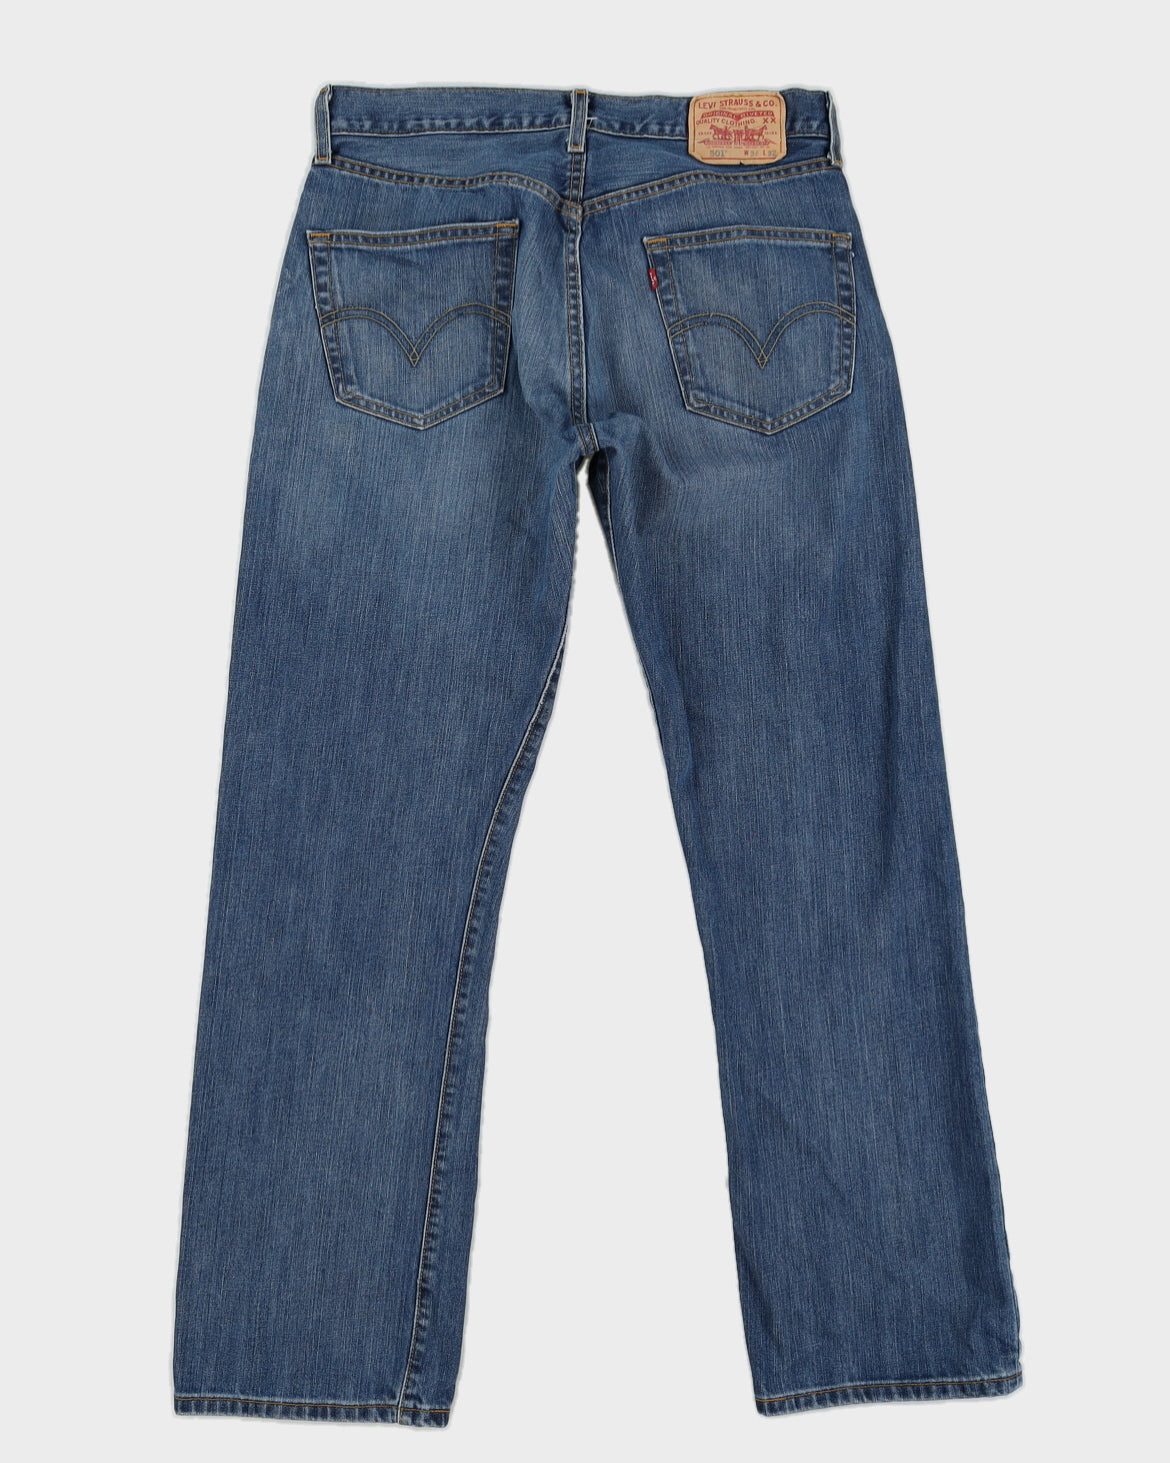 Levi's 501 Medium Washed Blue Jeans - W34 L32